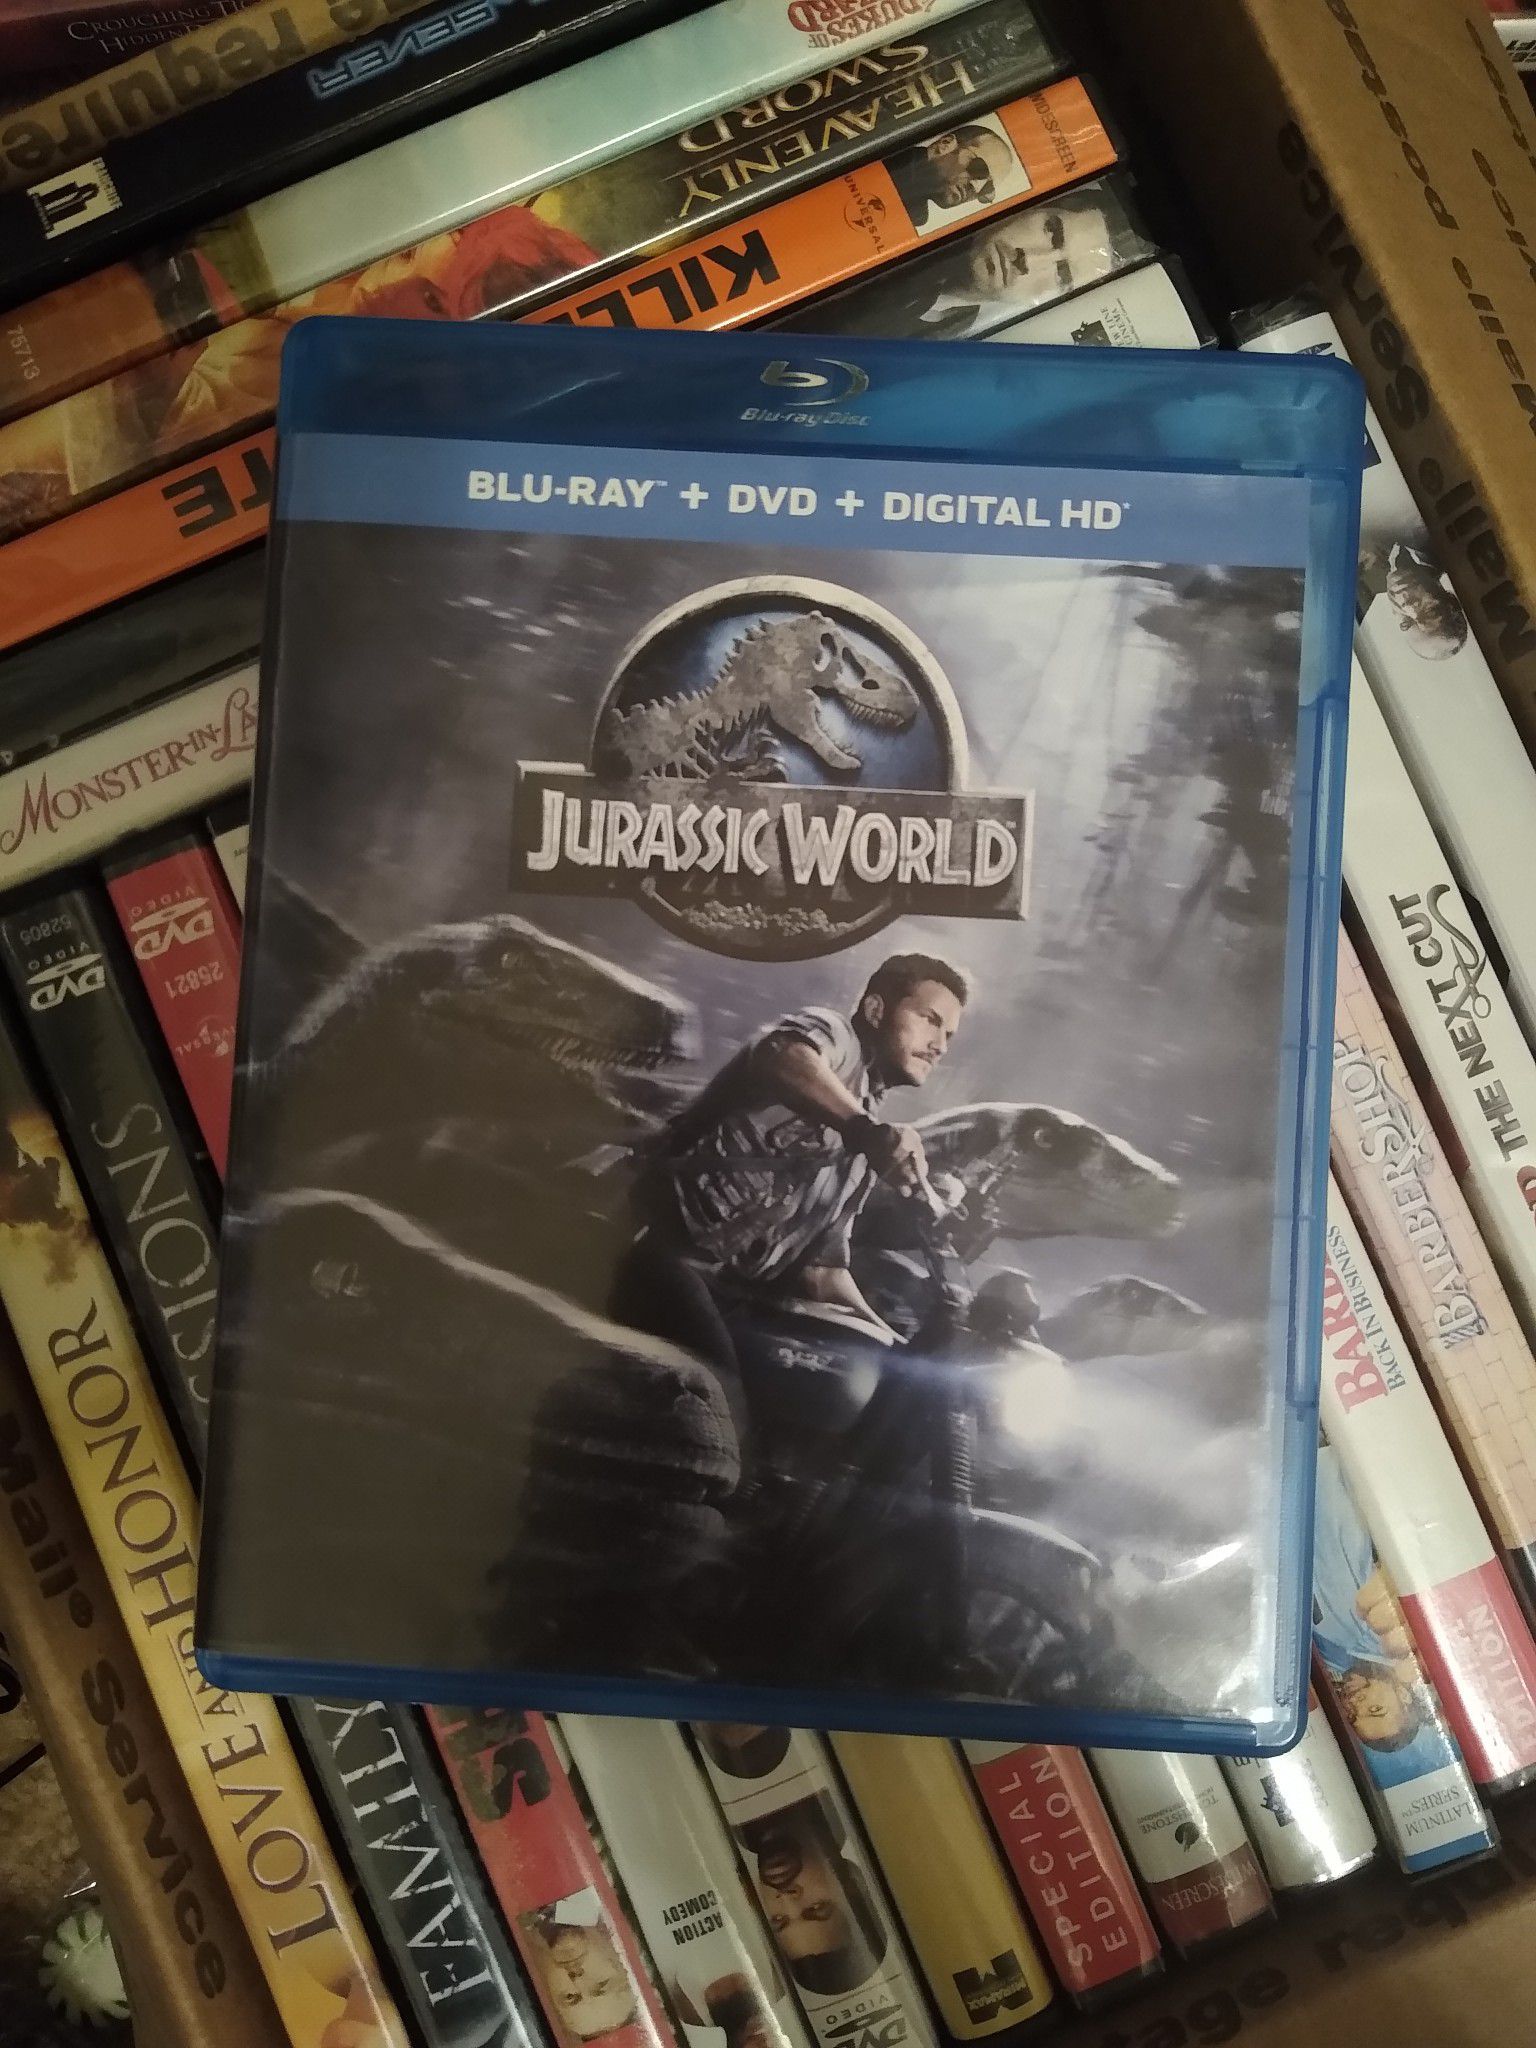 DVD BLURAY "Jurassic World"